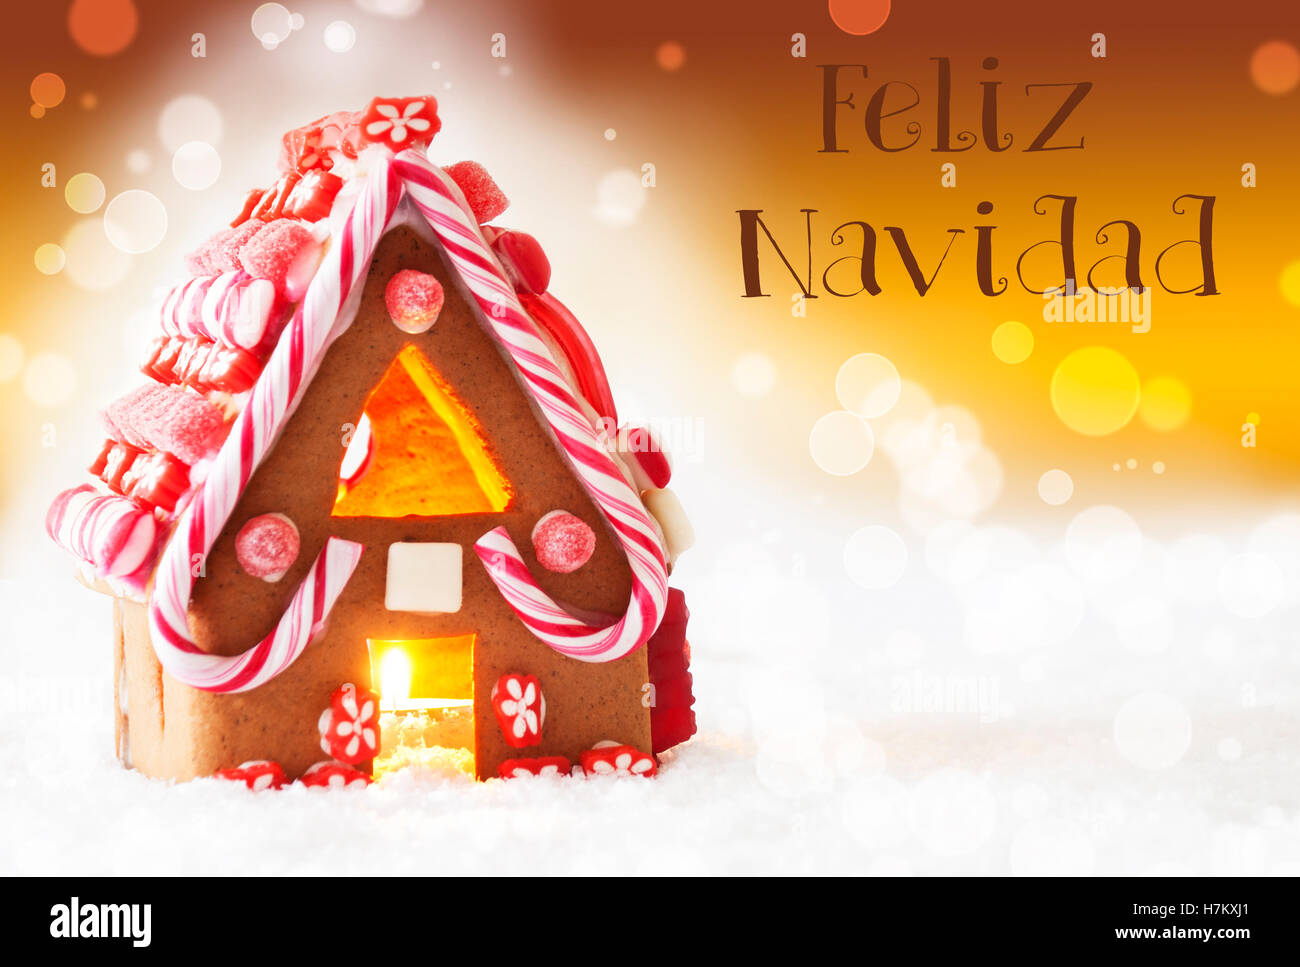 Gingerbread House, Golden Background, Feliz Navidad Means Merry Christmas Stock Photo